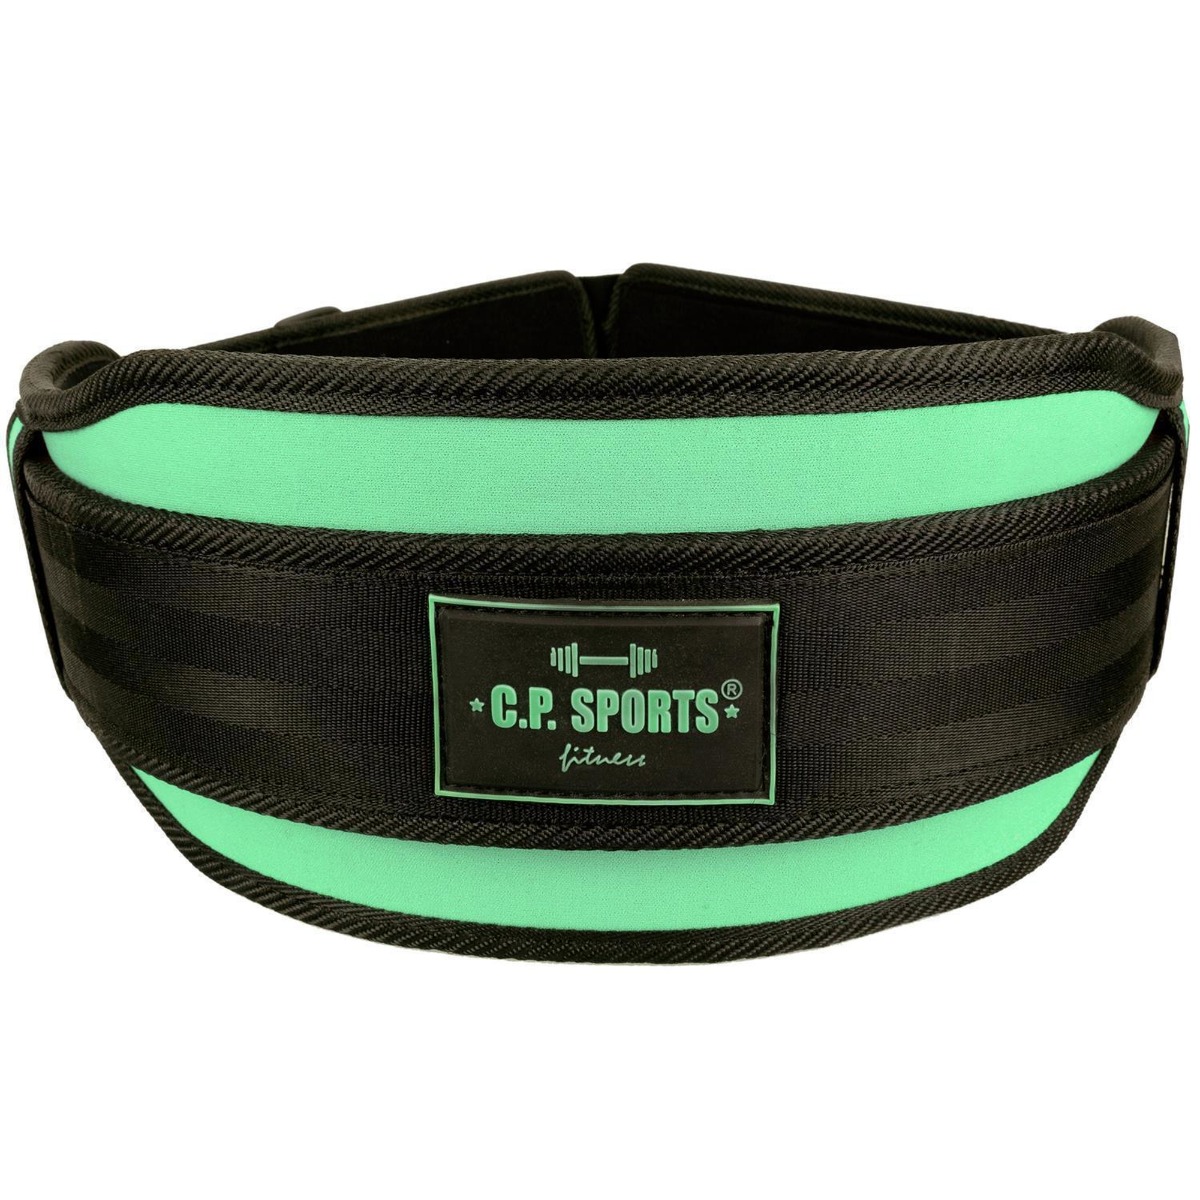 Fitness opasek mint - C.P. Sports mint S